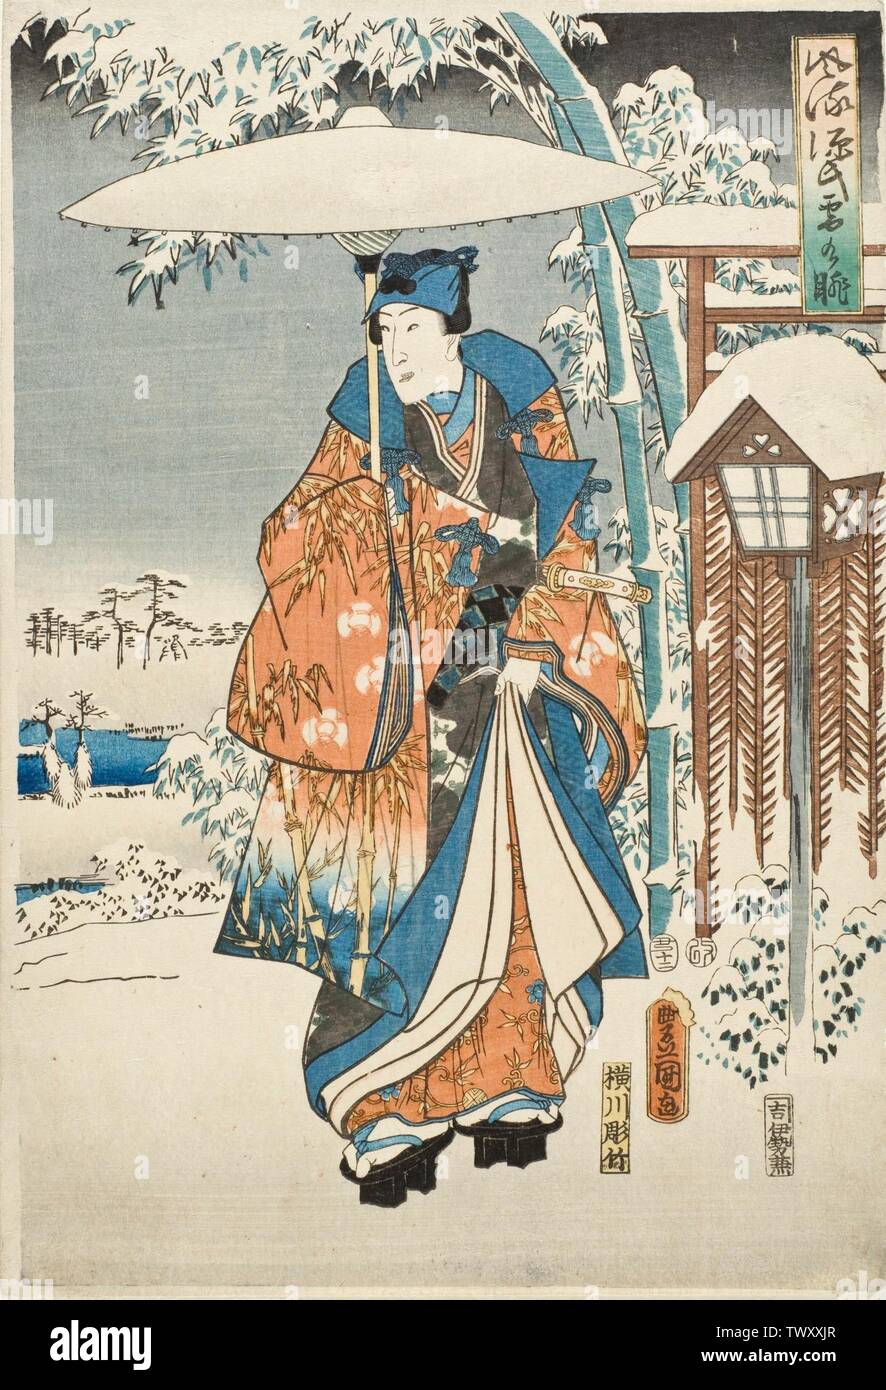 Un Genji Elegante en la nieve; 1853 impresiones; woodcuts Color woodbk imprimir Imagen: 14 11/16 x 9 15/16 pulg. (37.31 x 25.24 cm); Hoja: 14 7/8 x 10 1/8 pulg. (37.78 x 25.72 cm) Regalo de Arthur y Fran Sherwood (M.157.152.56) Arte japonés; 1853date QS:P571,+1853-00-00T00:00:00Z/9; Foto de stock